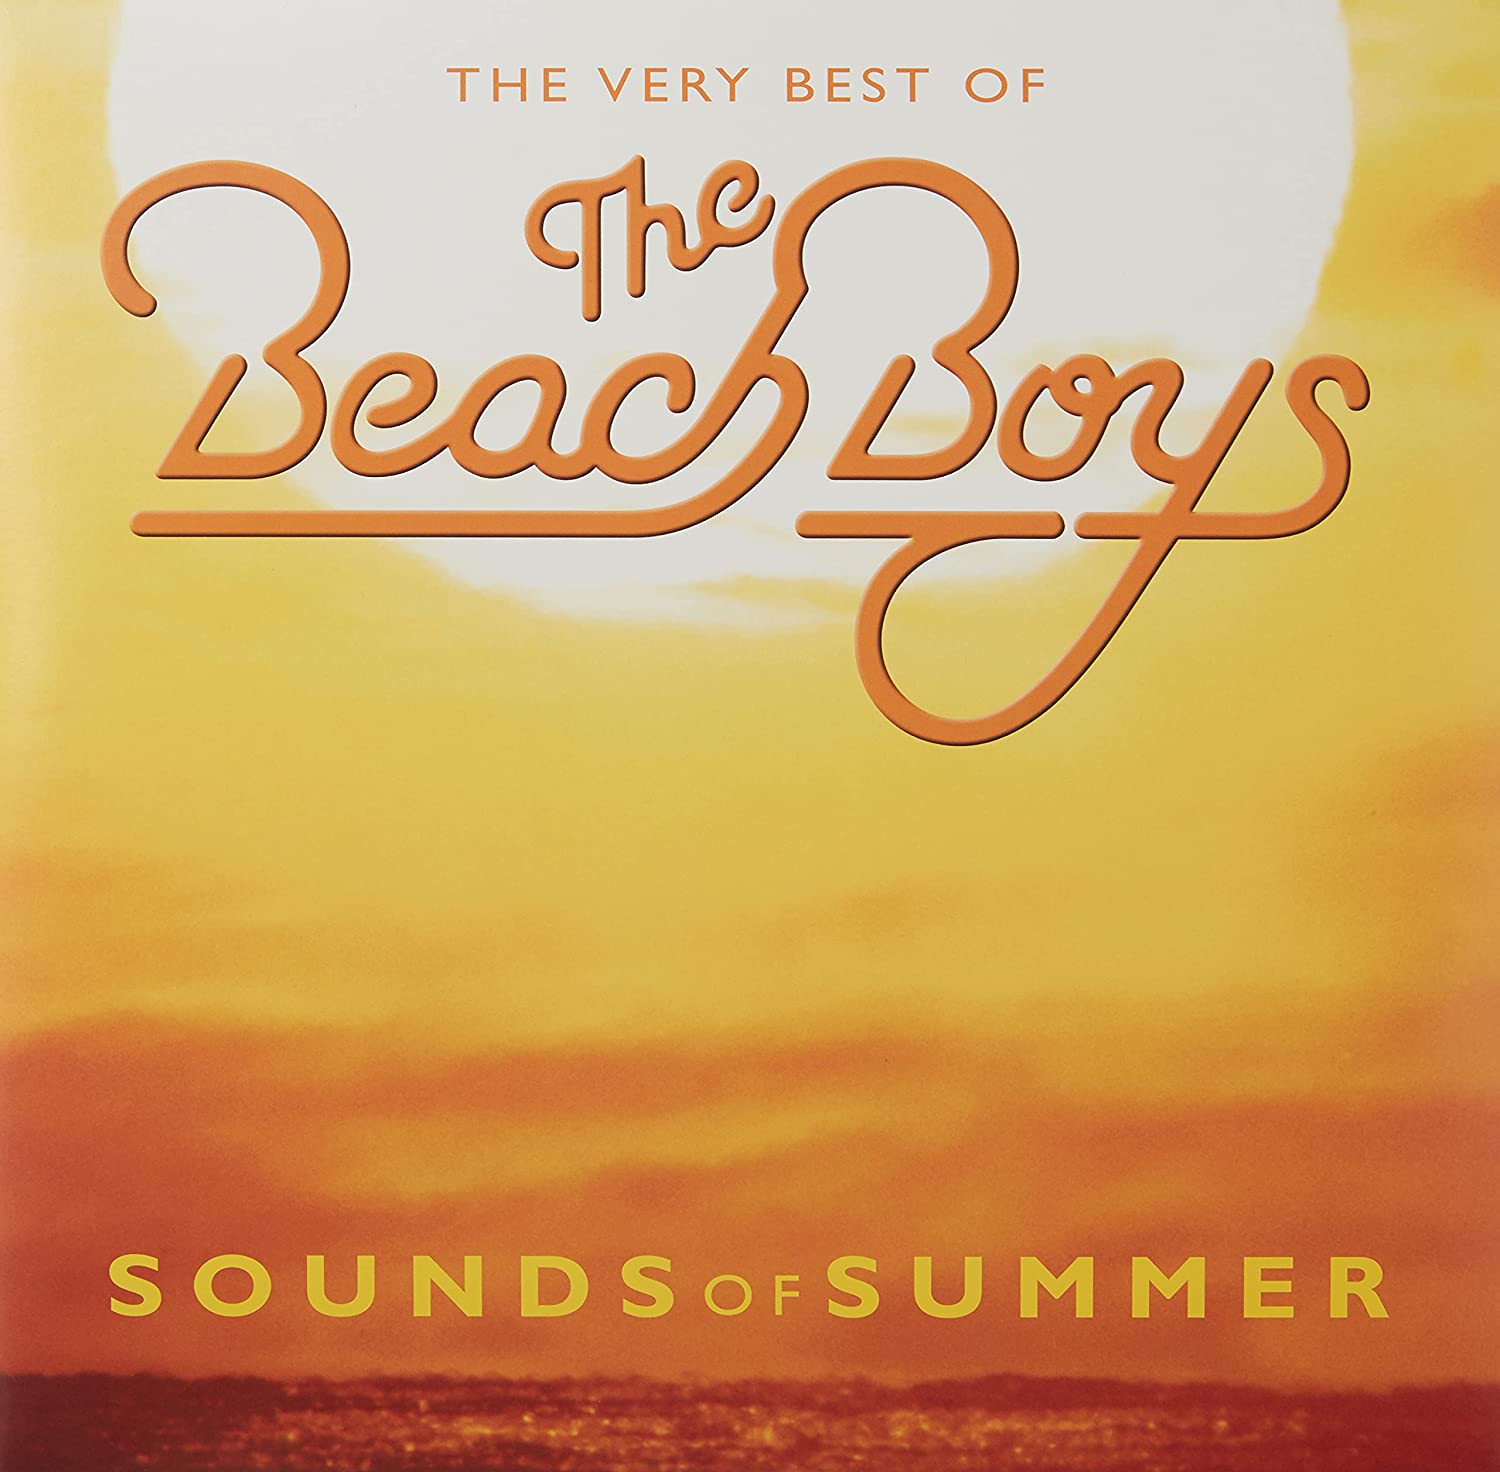 Sounds Of Summer by The Beach Boys (Double Vinyl LP, 2018) - LV'S Global Media